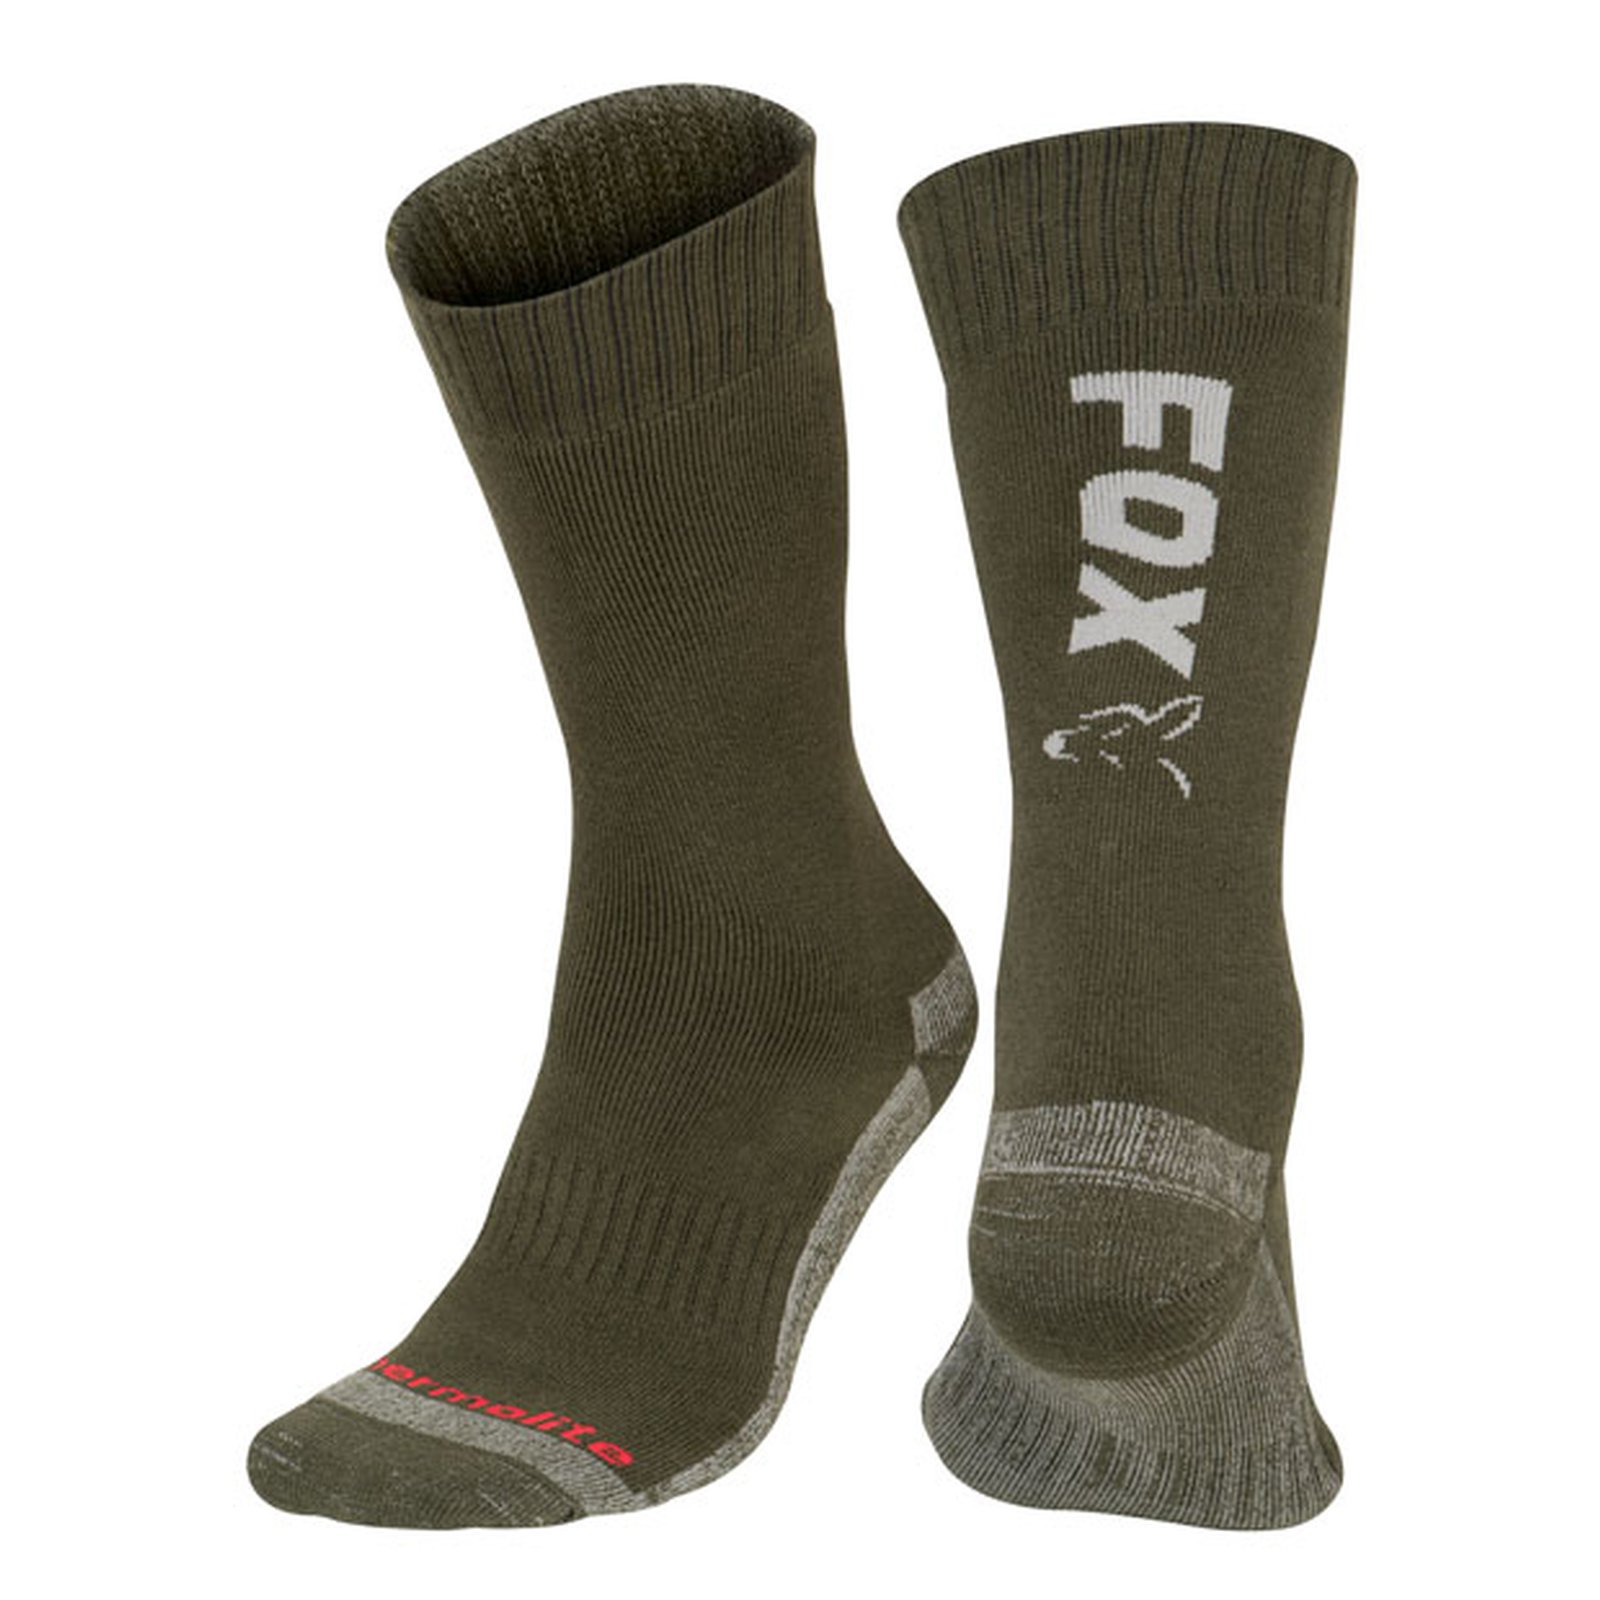 Fox Green / Silver Thermolite long sock 6 - 9 (Eu 40-43)